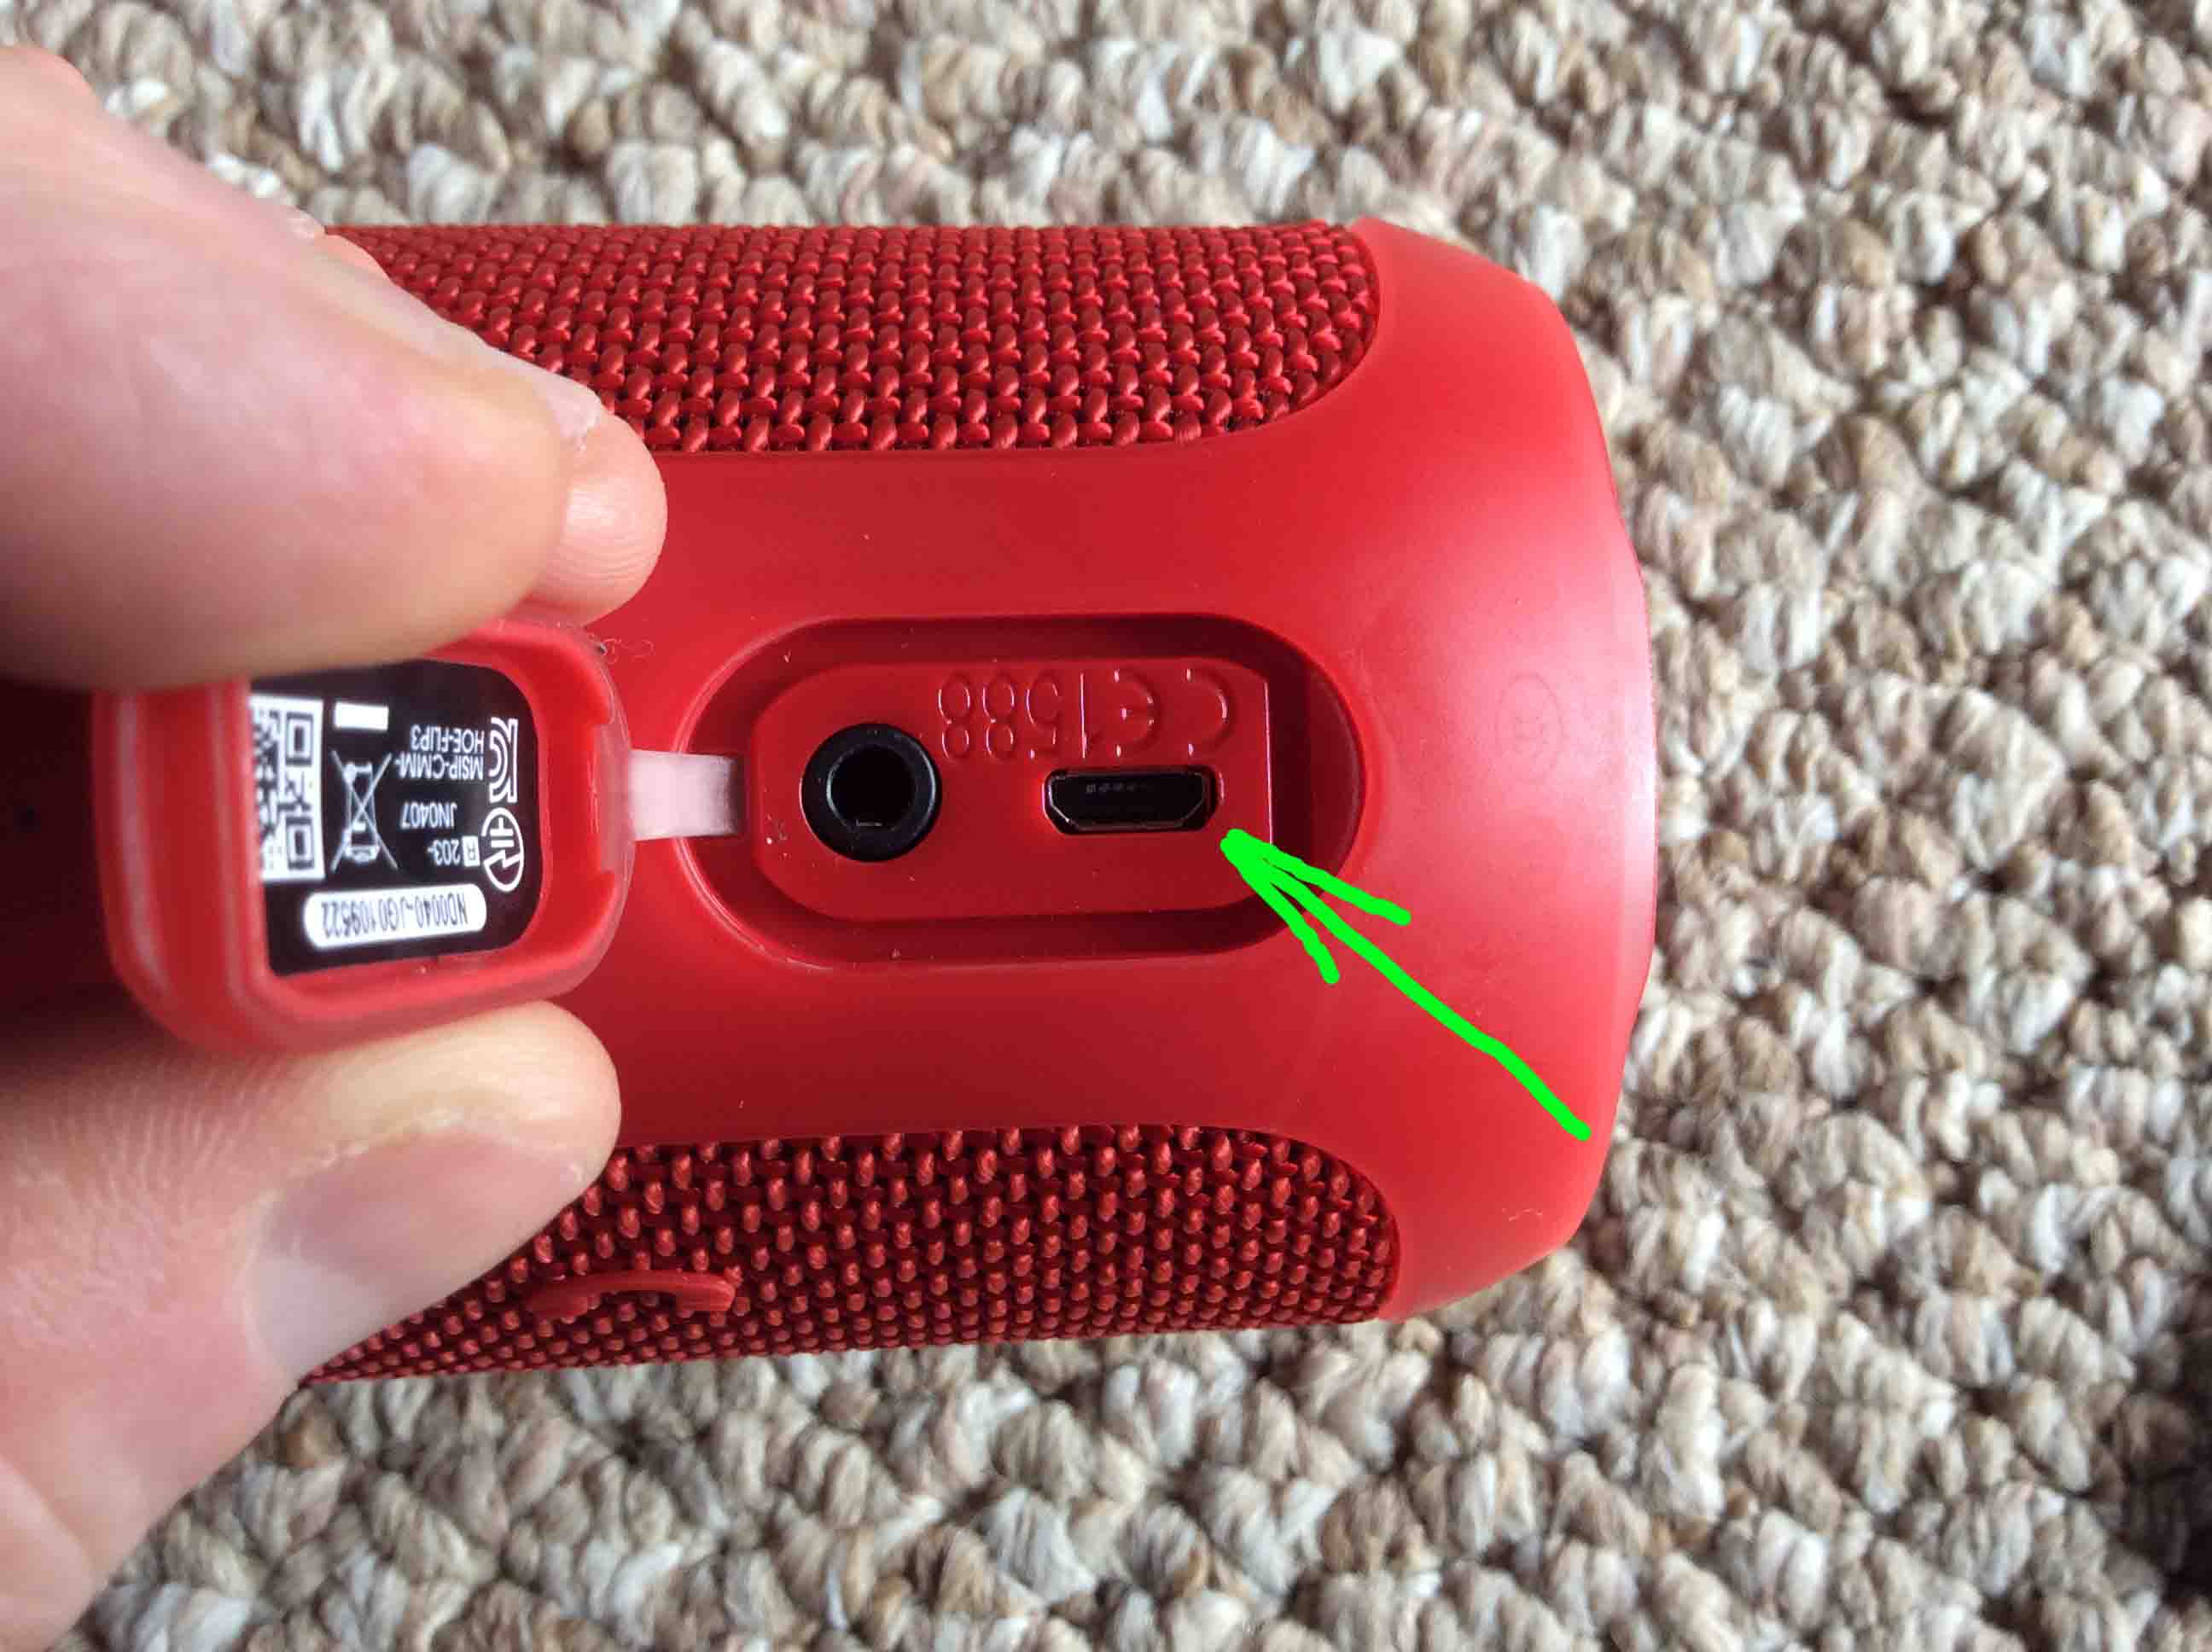 How to Charge JBL Flip 3 Bluetooth Tom's Tek